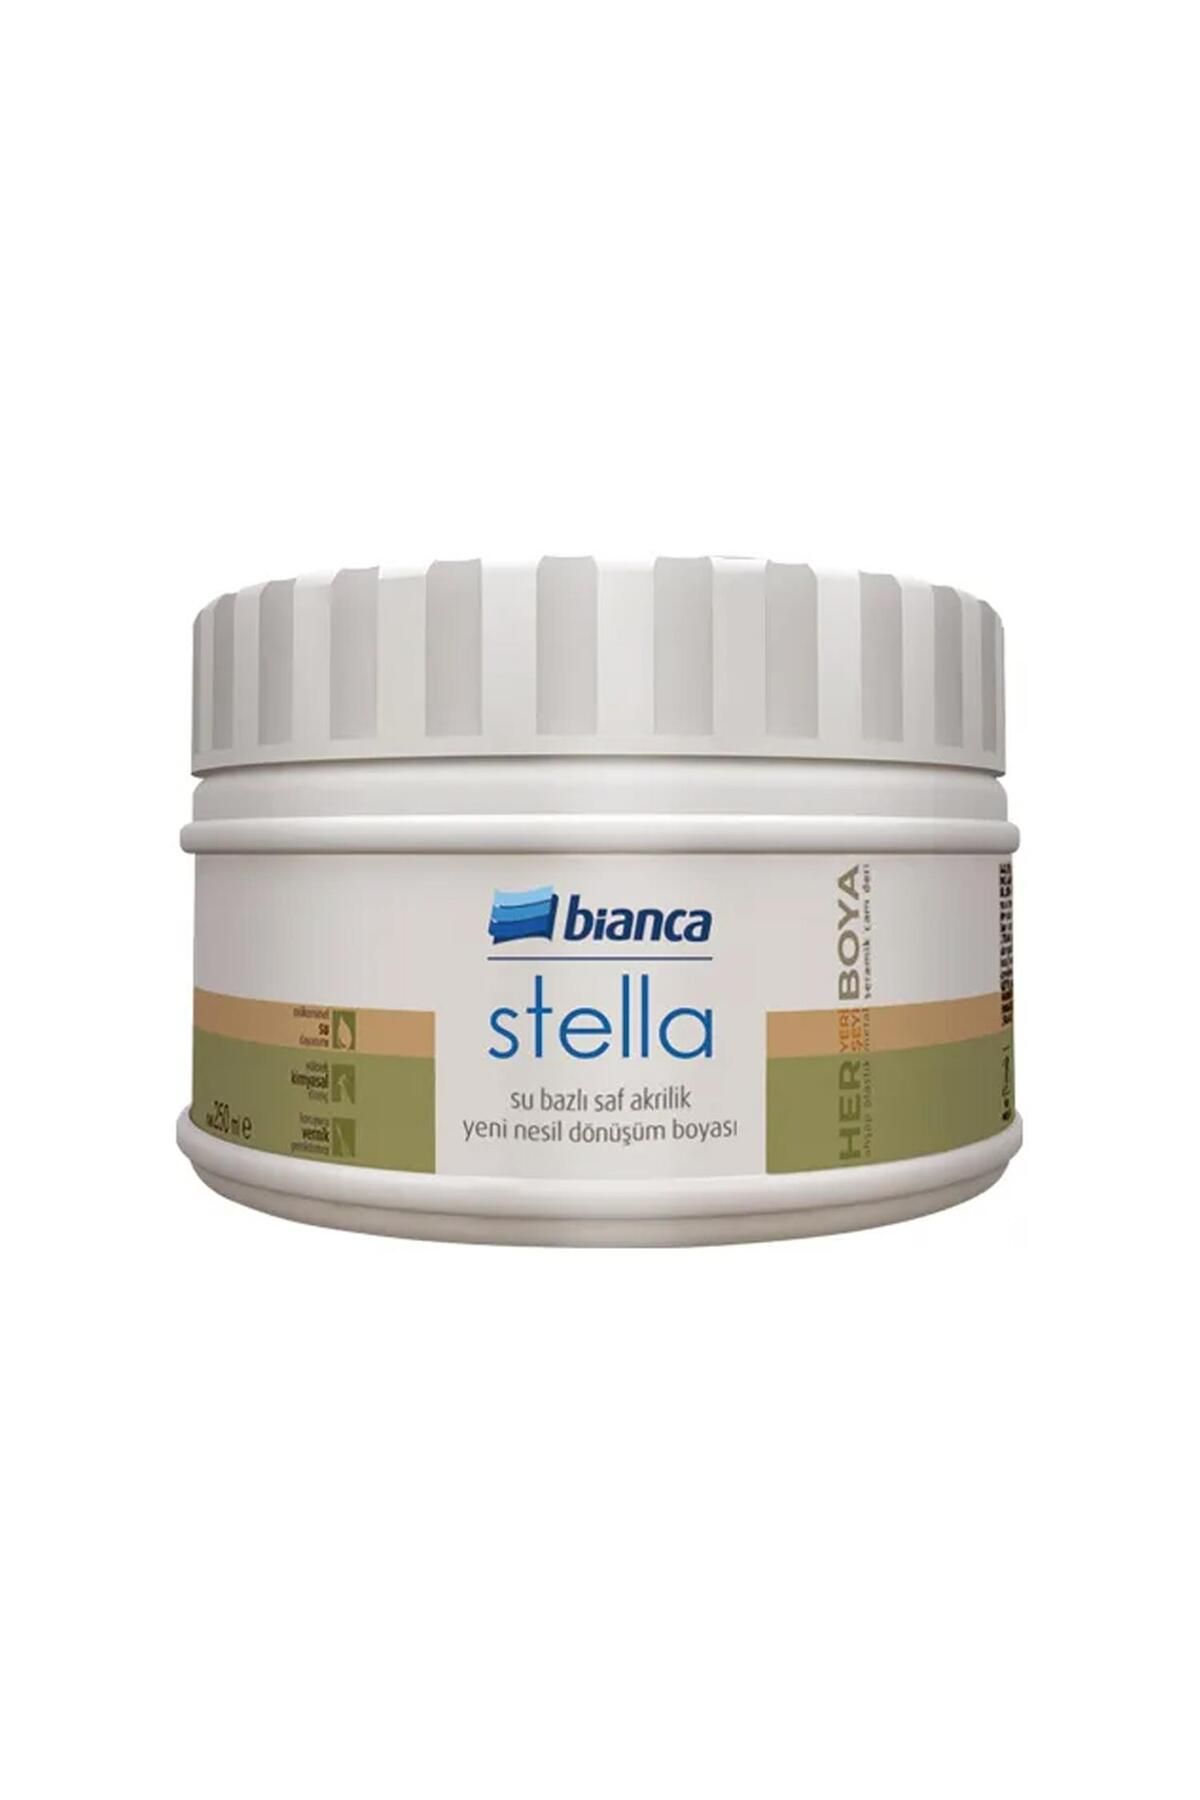 Bianca Stella Su Bazlı Saf Akrilik Boya Altın 0.25 Kg